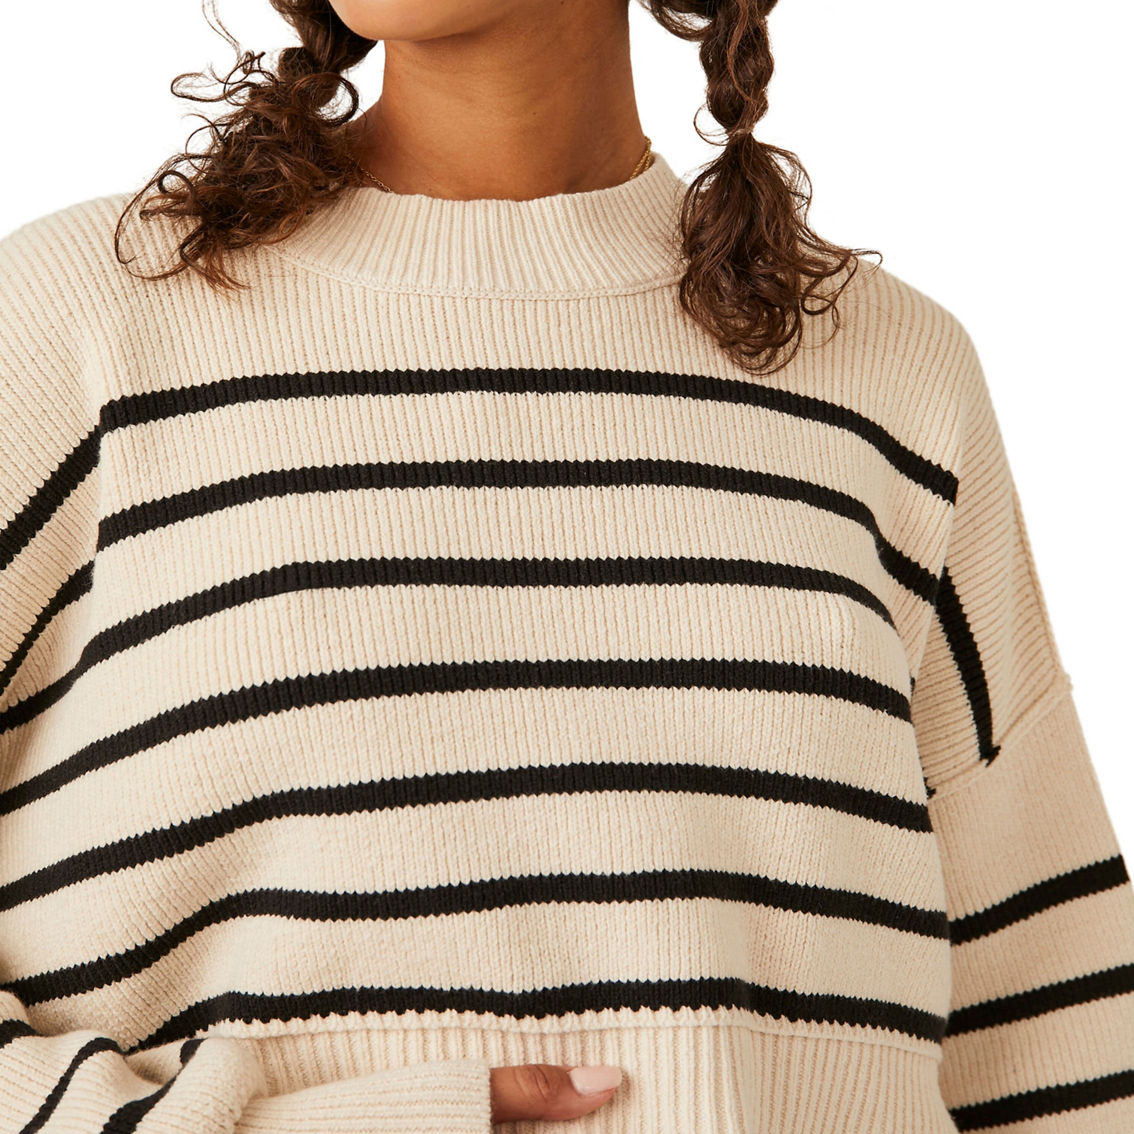 Free People Easy Street Stripe Crop Pullover | Tops | Clothing ...